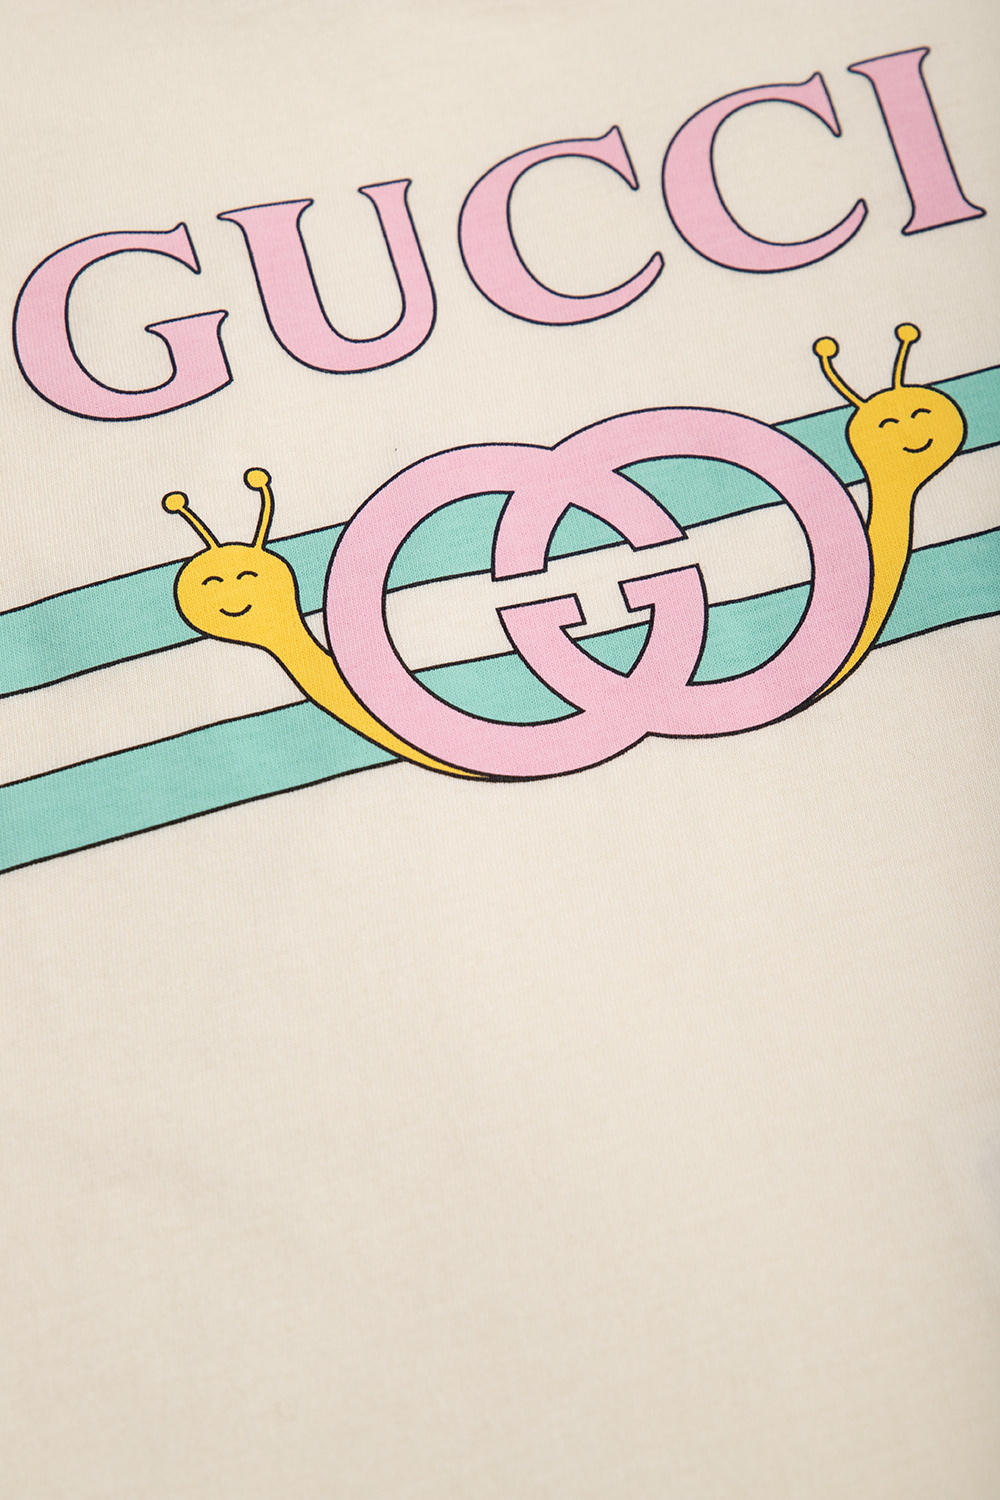 Gucci Kids monogram gucci Full Length